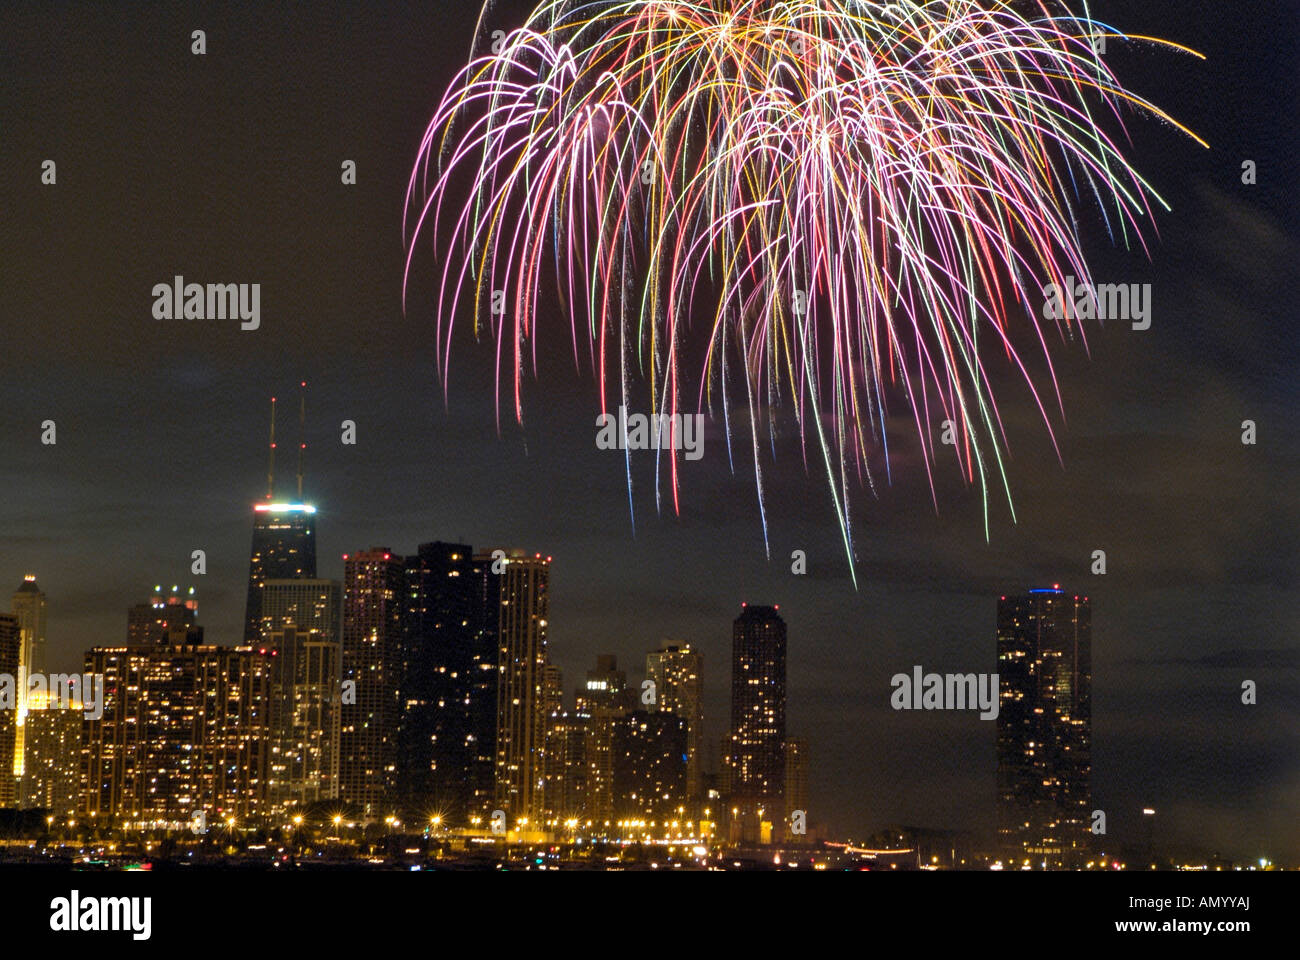 USA, Illinois, Chicago, Fourth of July fireworks over Monroe Harbor Stock Photo